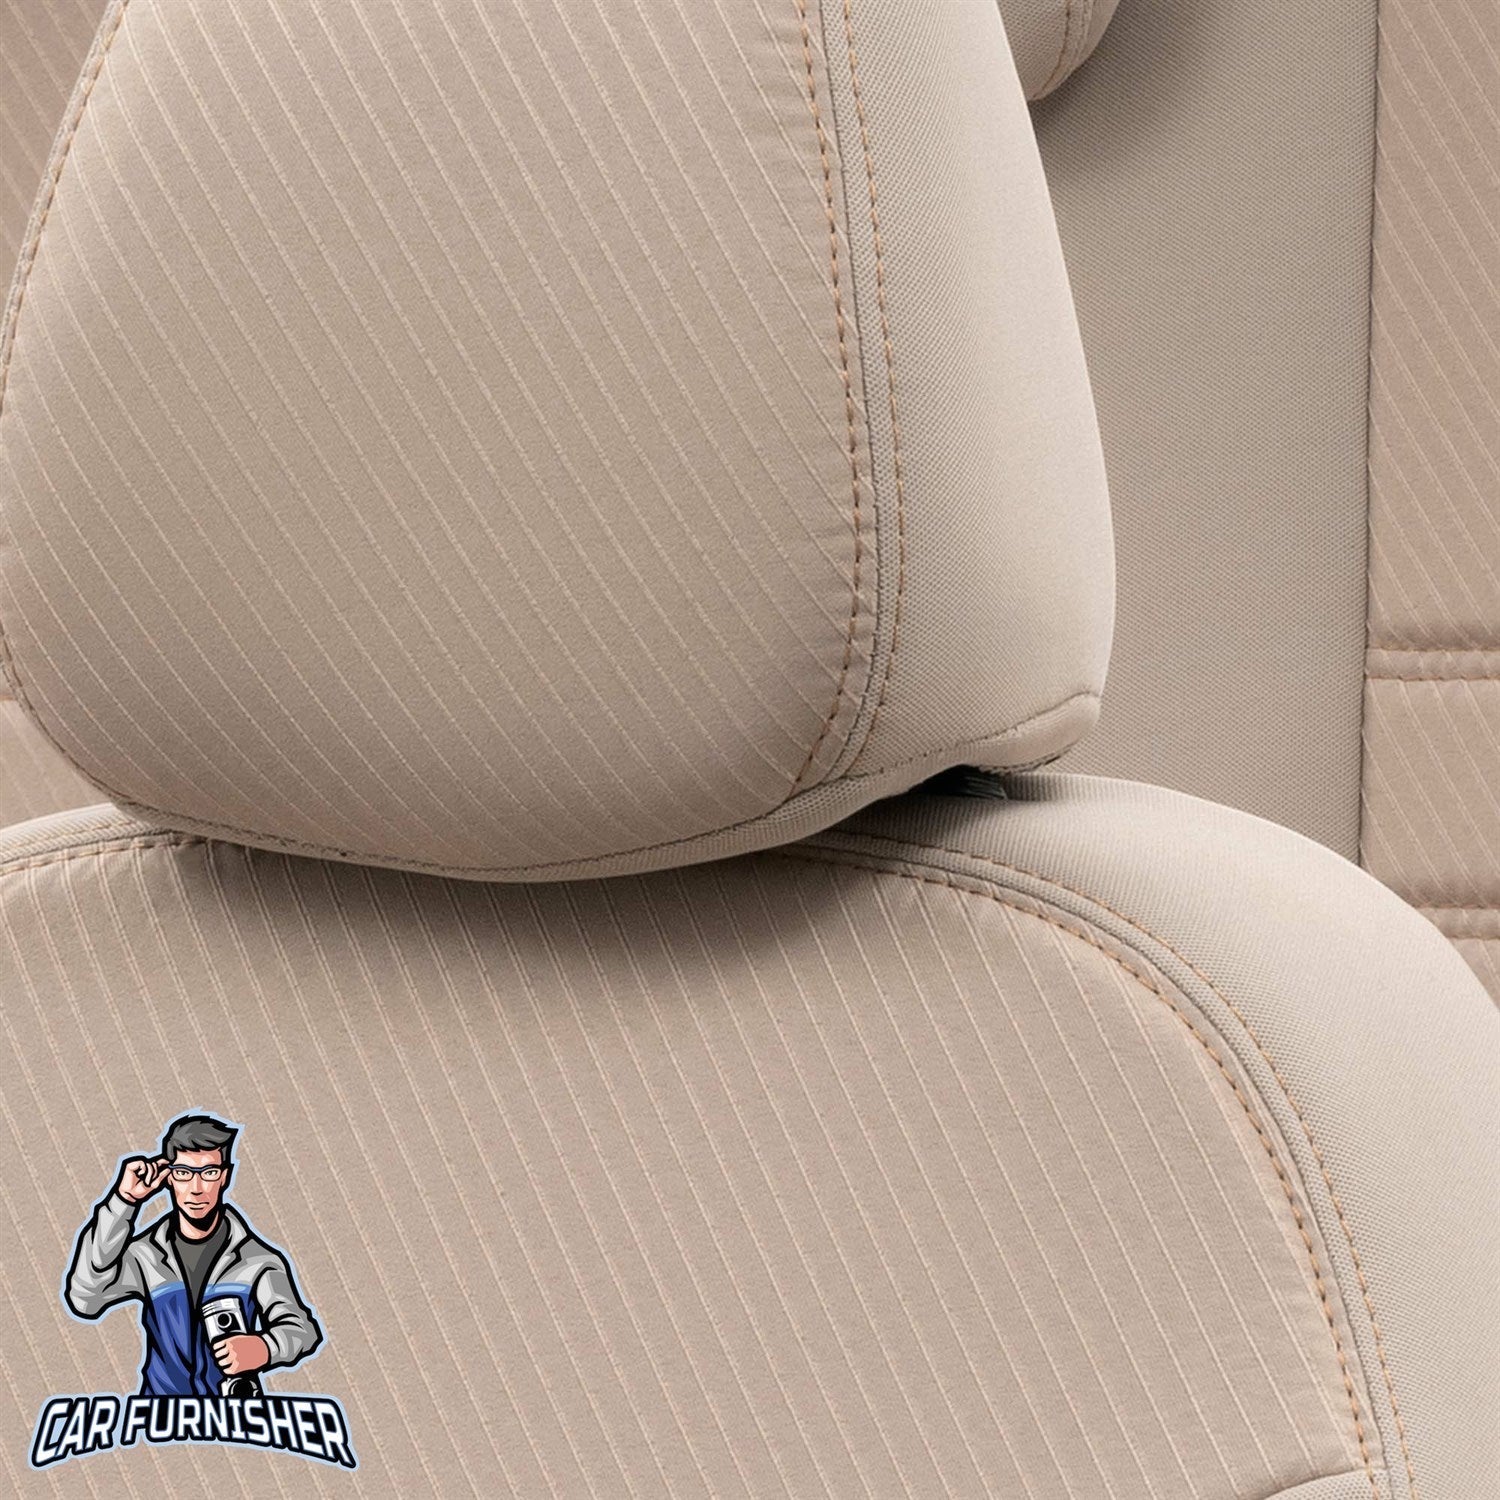 Seat Cordoba Seat Covers Original Jacquard Design Dark Beige Jacquard Fabric